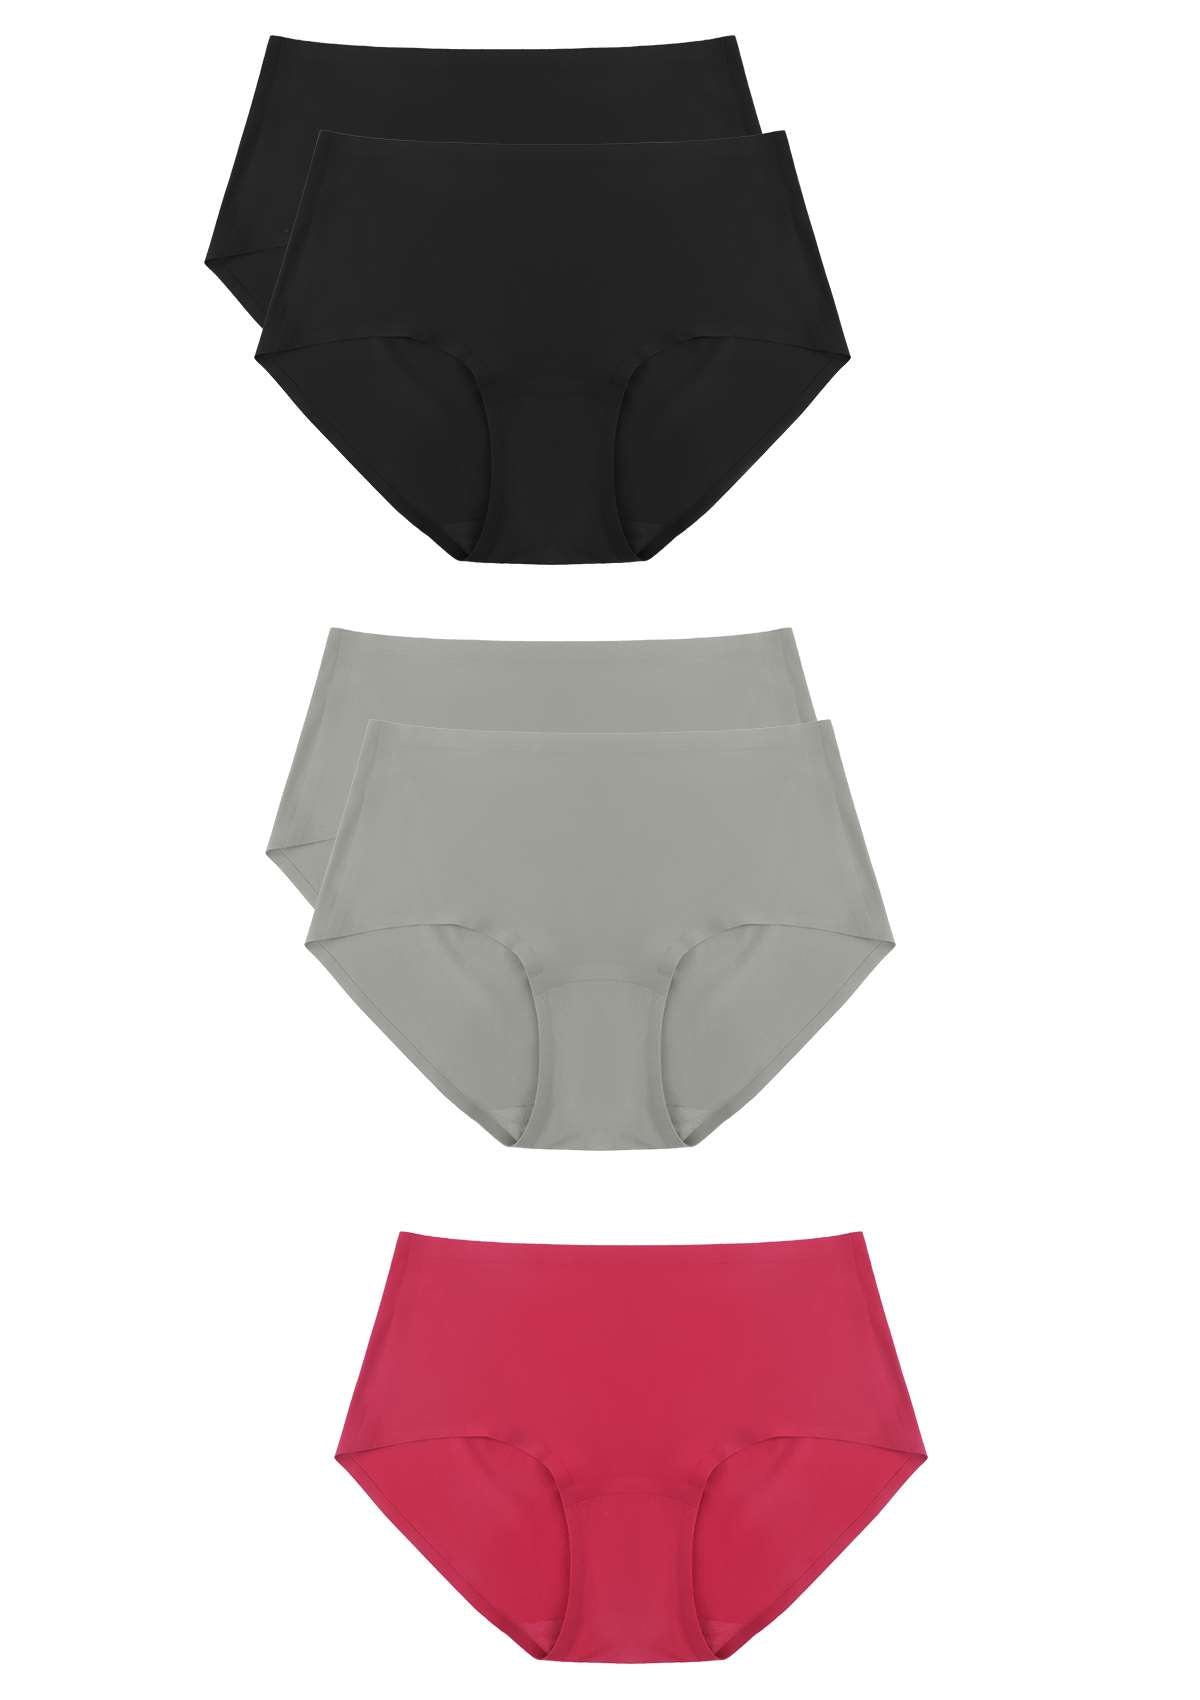 HSIA FlexiFit Soft Stretch Seamless Brief Underwear Bundle - 5 Packs/$20 / L-2XL / 2*Black+2*Gray+Red